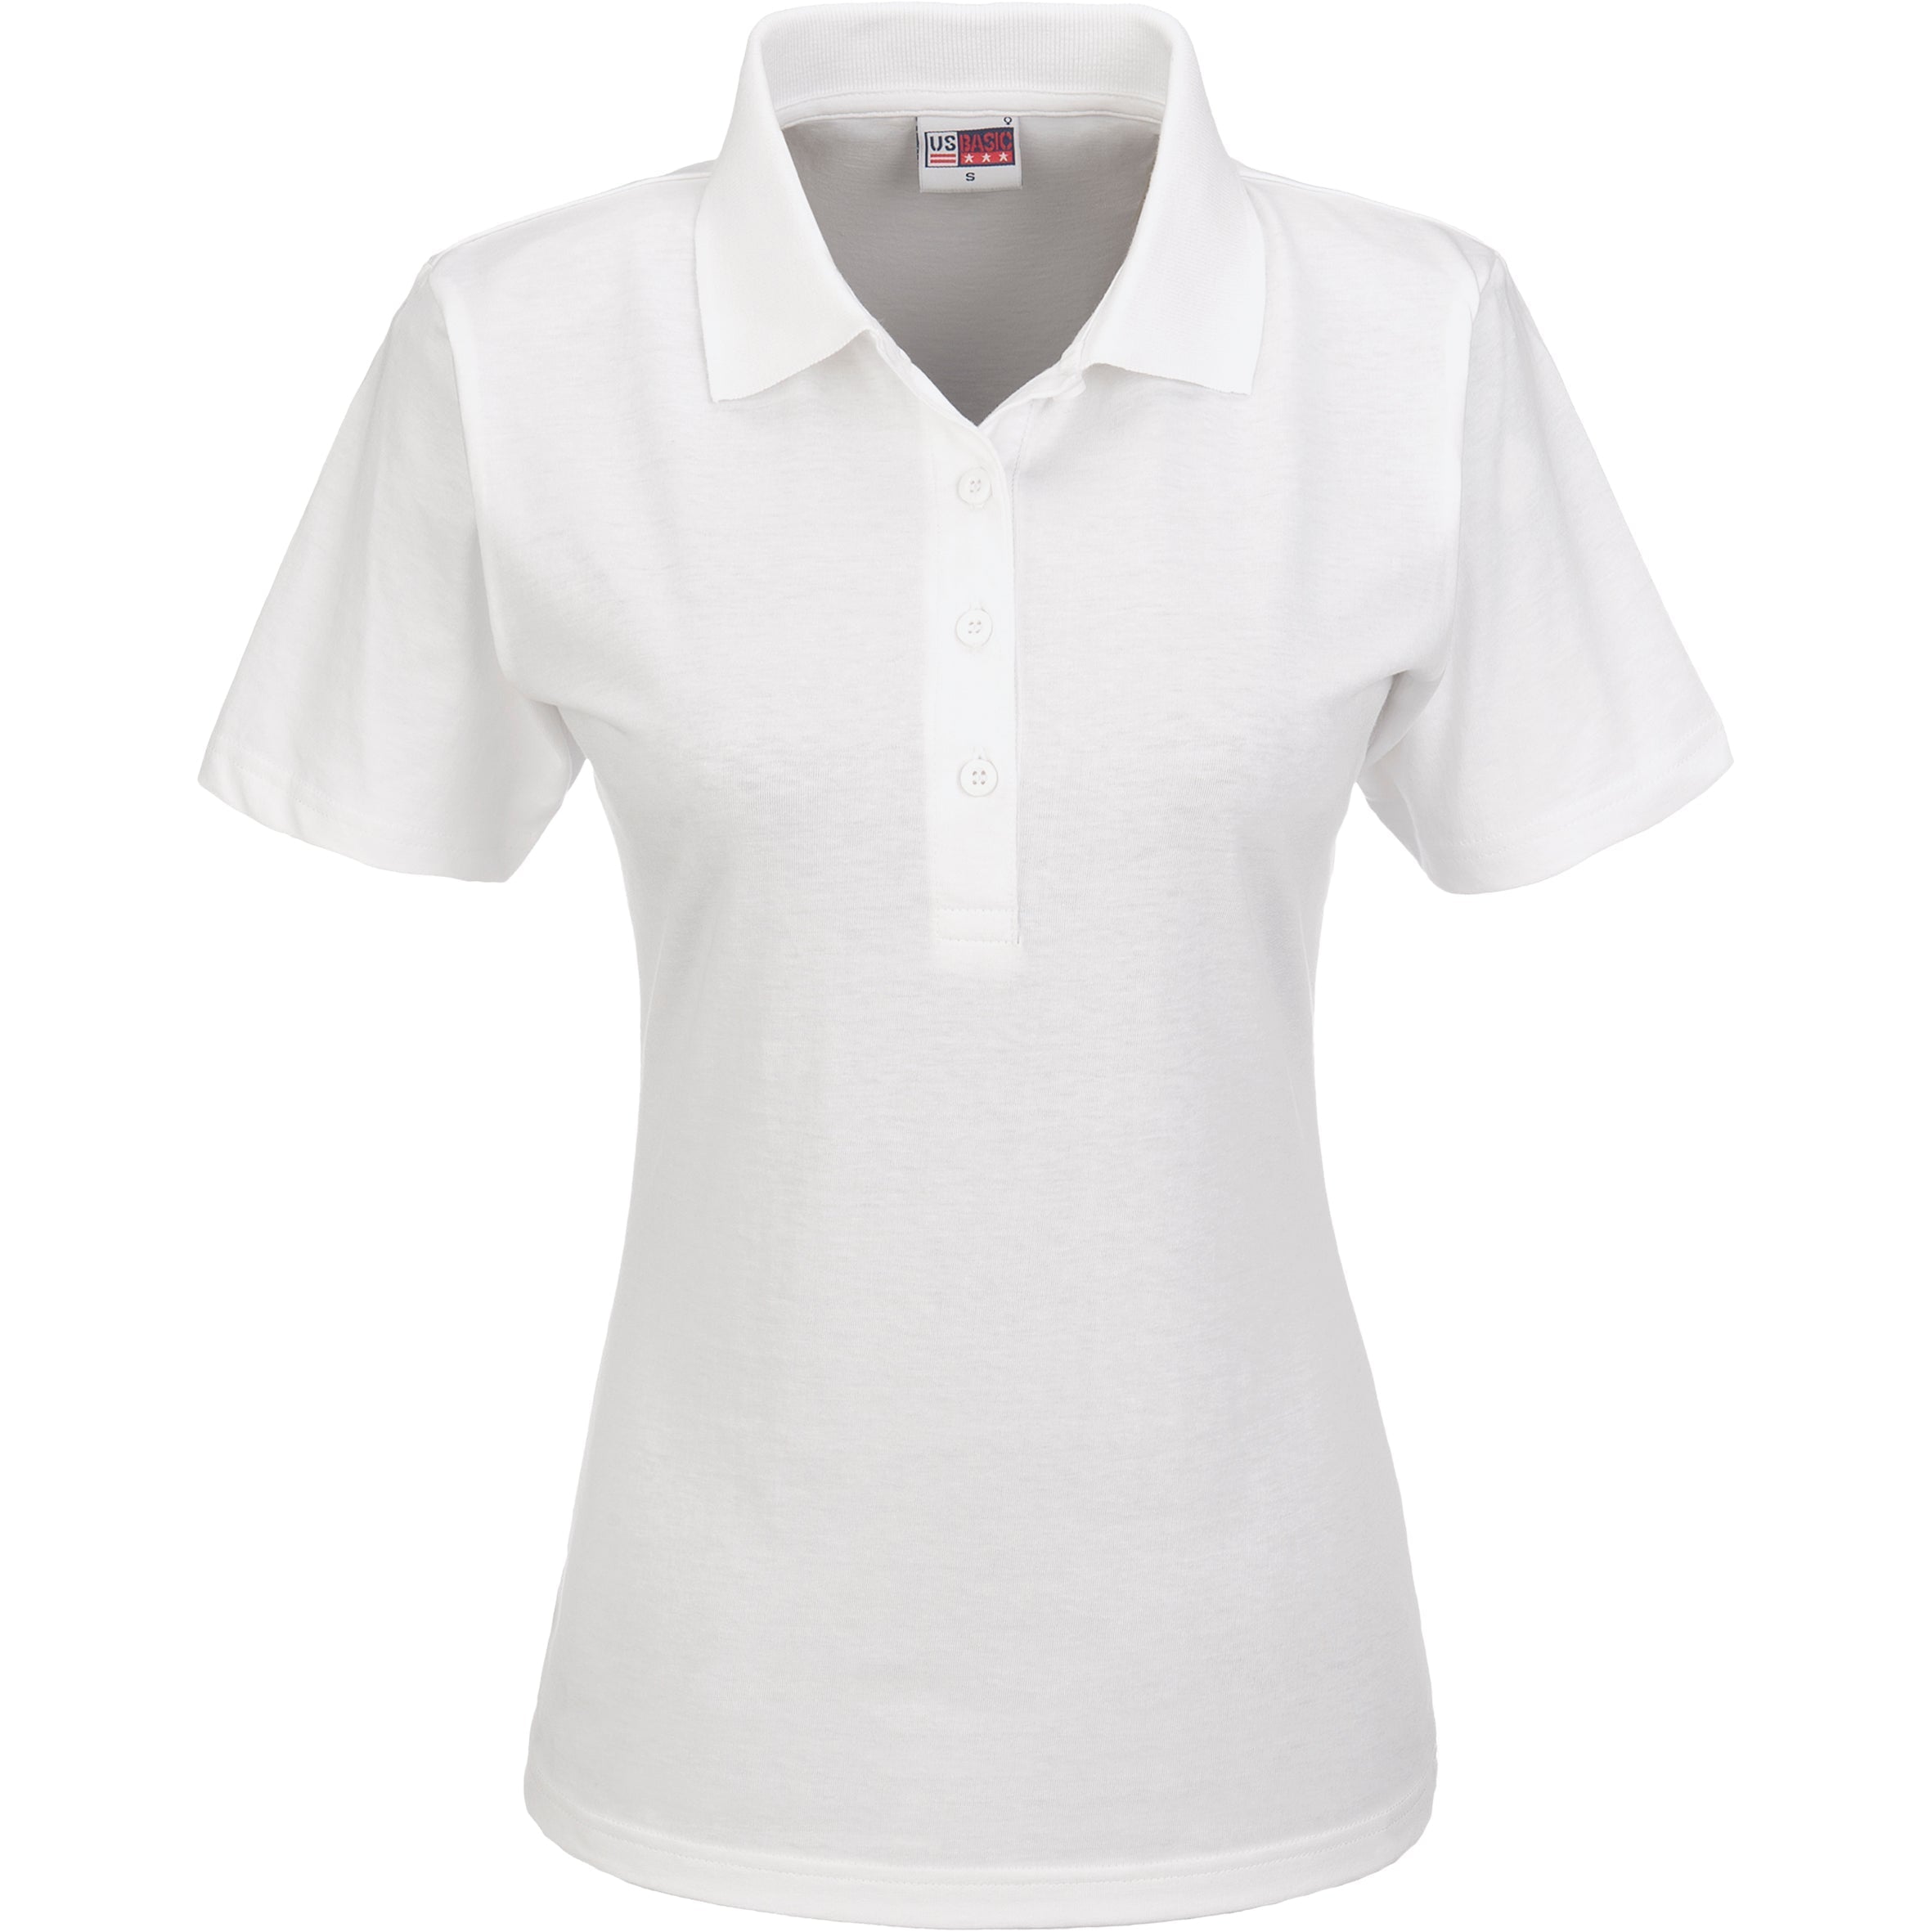 Ladies Cardinal Golf Shirt - Orange Only-L-White-W